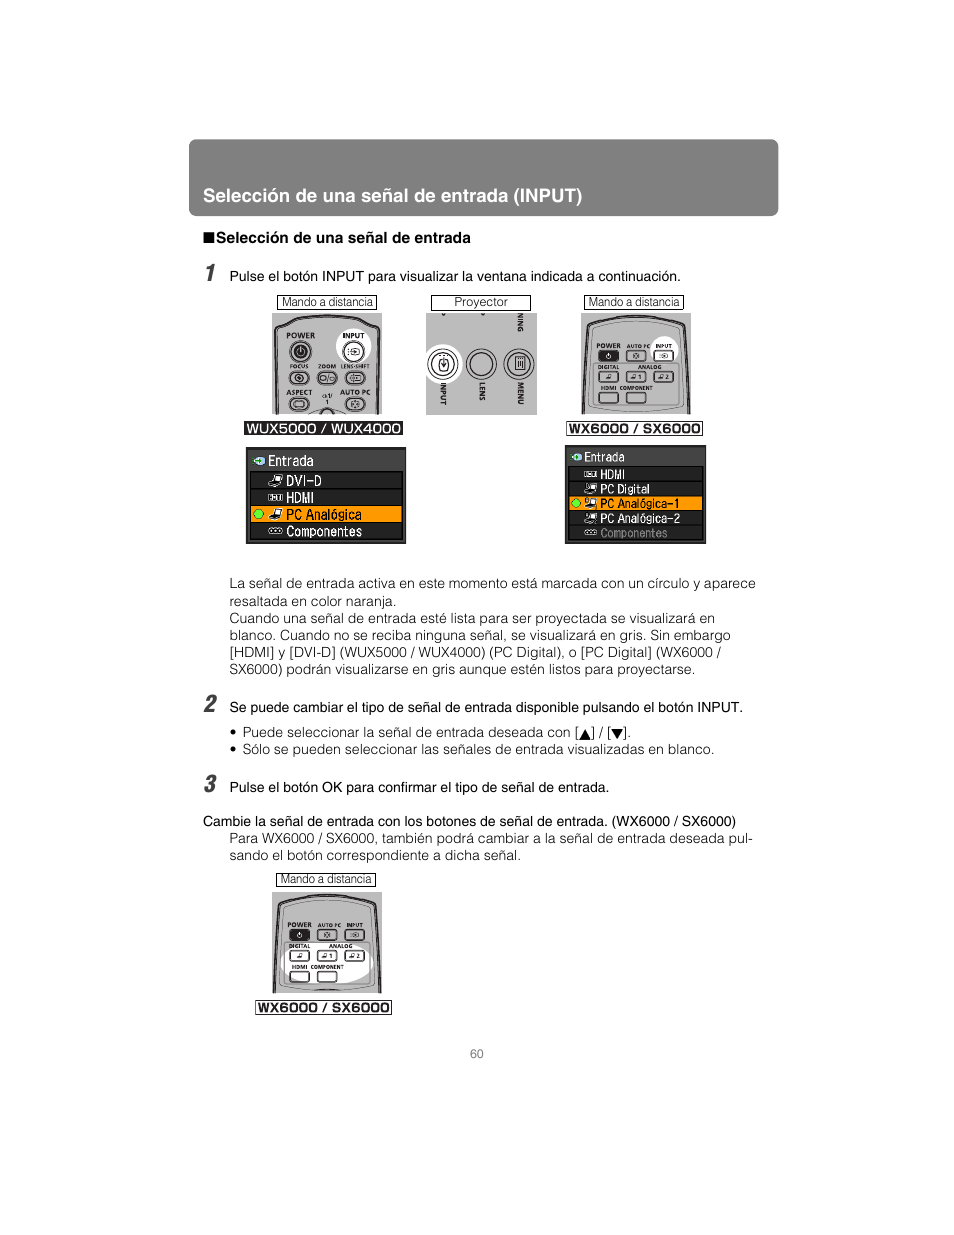 Selección de una señal de entrada, Botón input, Otón input | Canon XEED WUX4000 Manual del usuario | Página 60 / 242